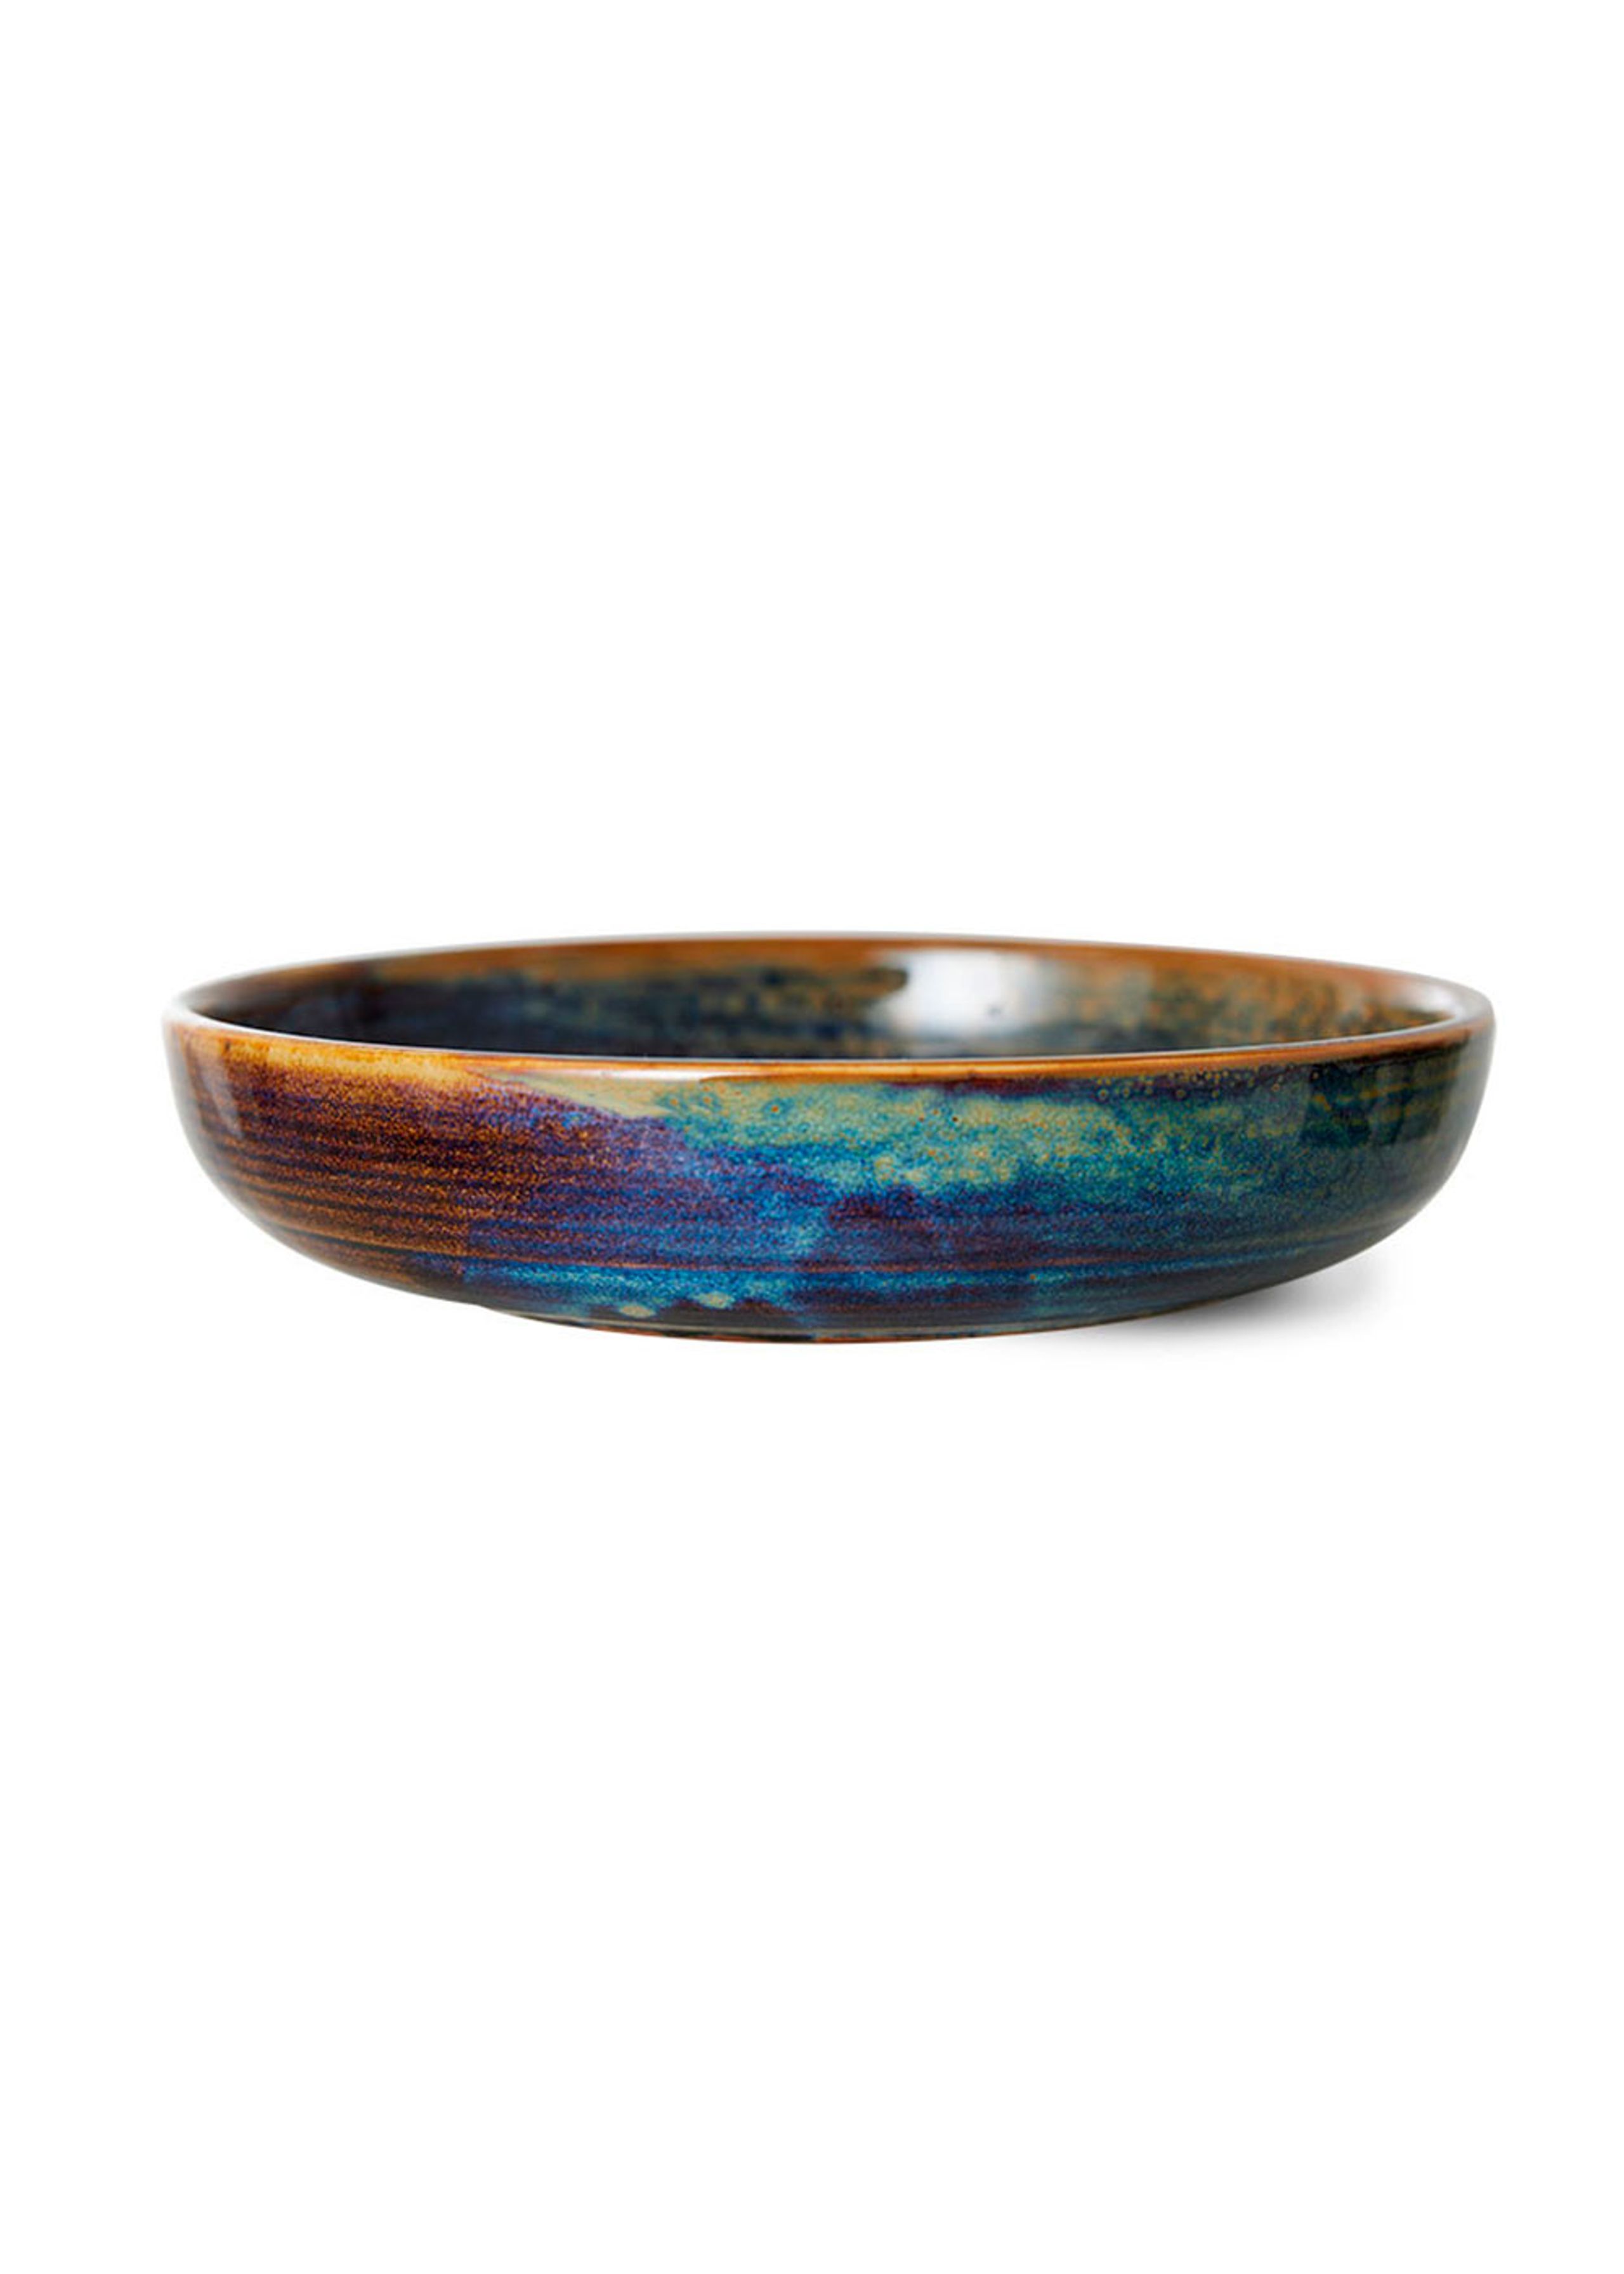 HKLiving - Teller - Chef Ceramics - Deep Plate, Medium - Rustic Blue